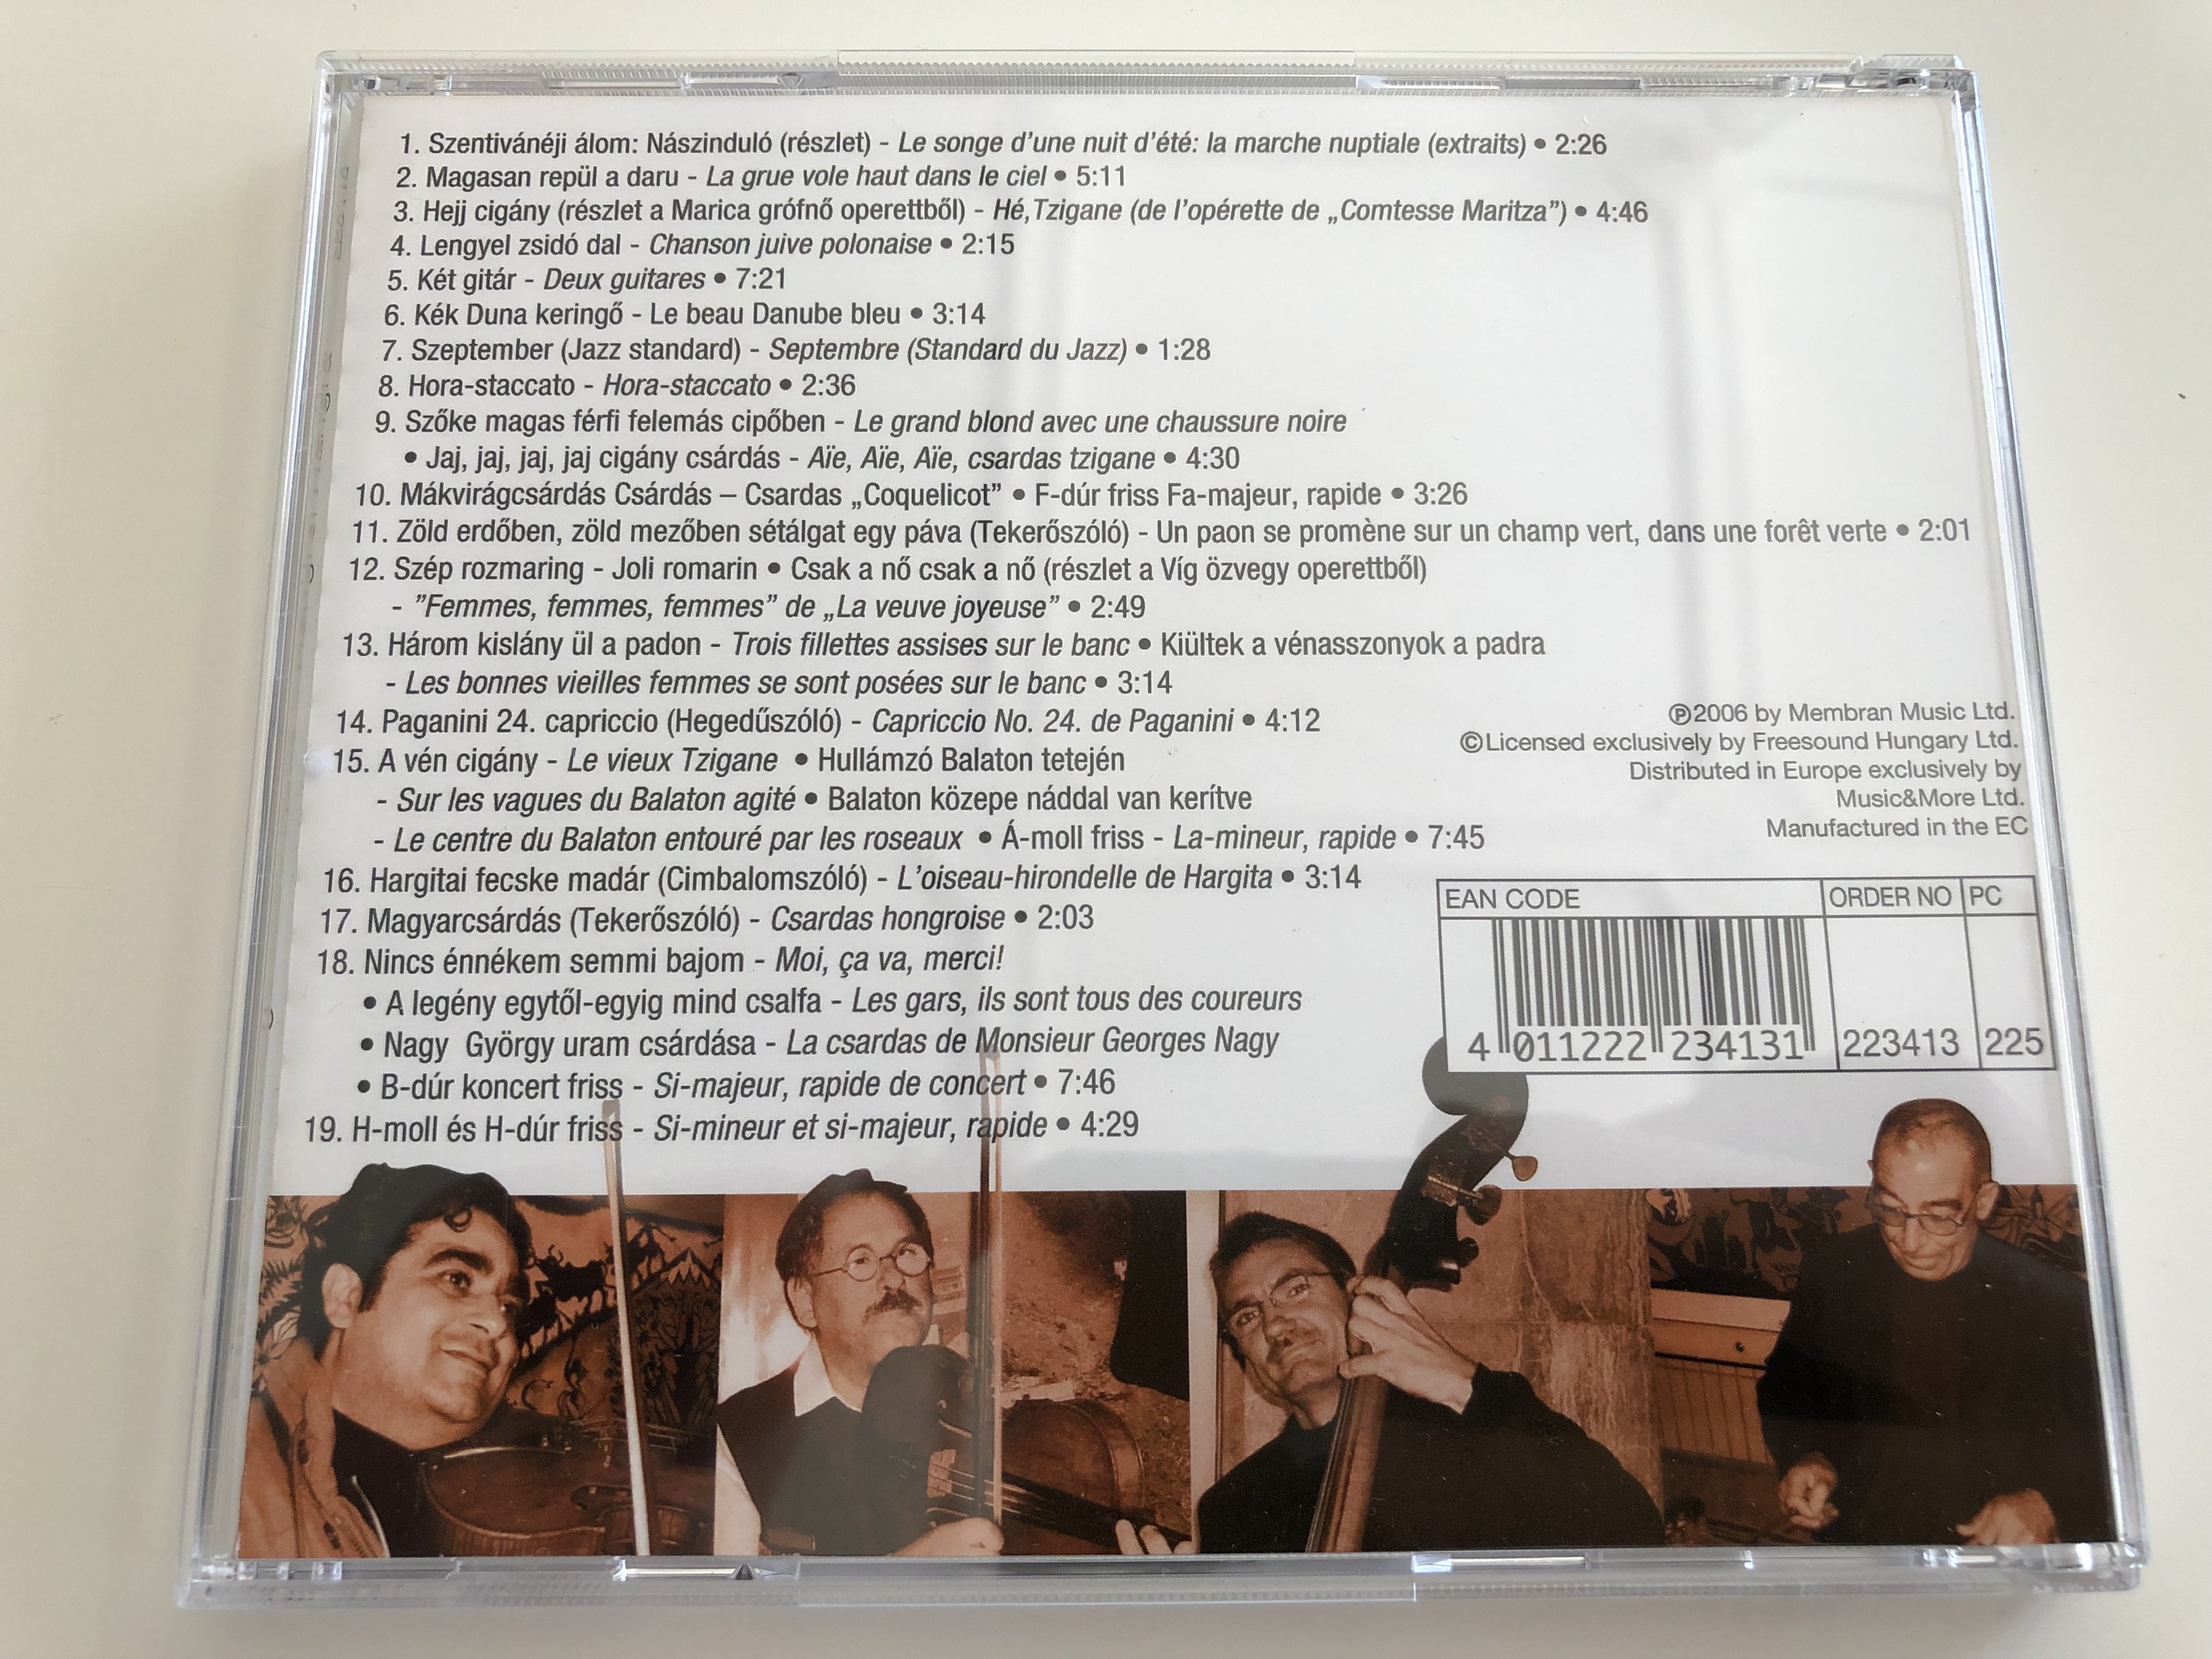 cifra-ensemble-mariage-avec-nous-hangr-l-hangra-audio-cd-2006-membran-music-5-.jpg